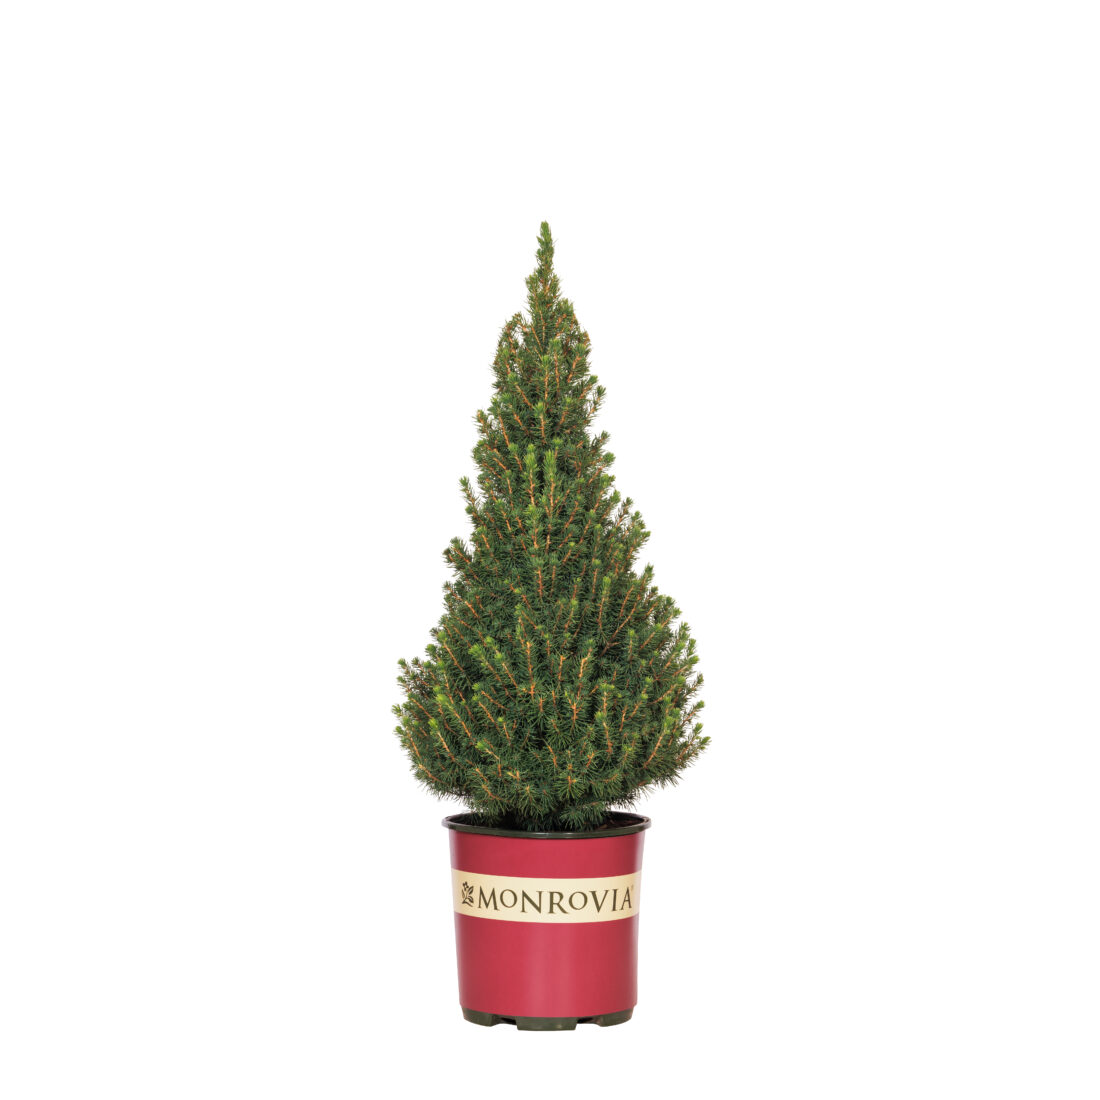 Description: Monrovia Dwarf Alberta Spruce, cone-shaped conifer, $30.